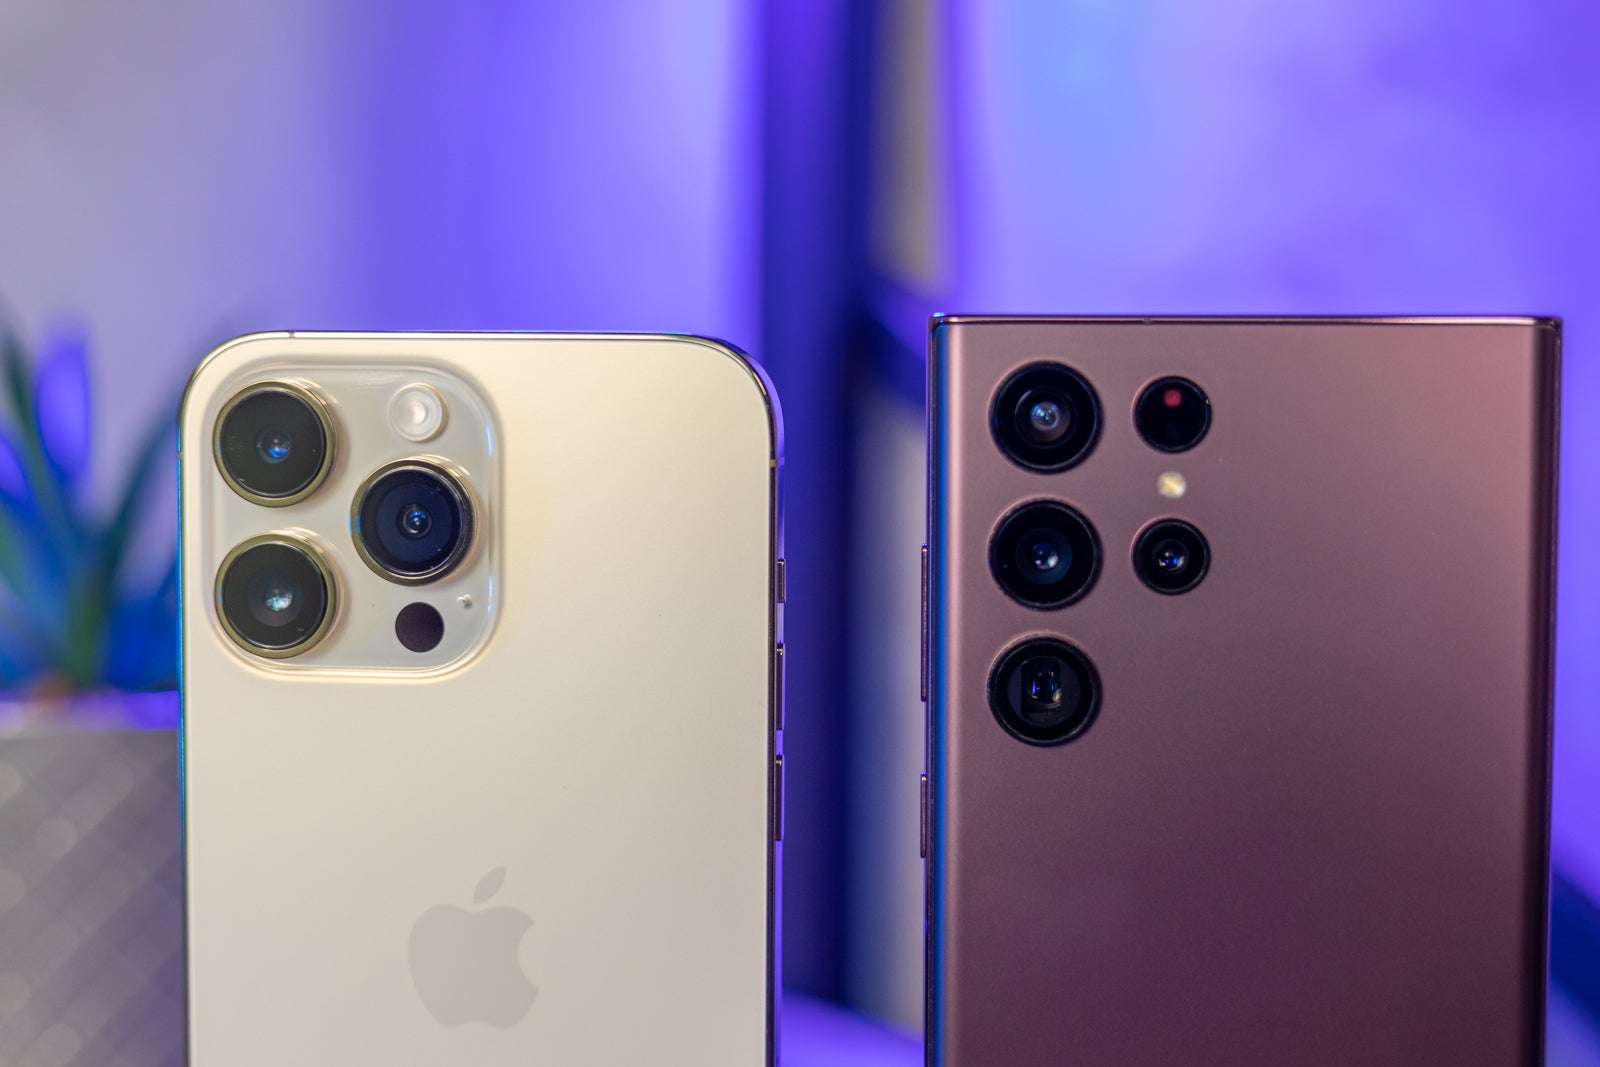 (Image Credit - PhoneArena) iPhone 14 Pro Max vs Galaxy S22 Ultra cameras - iPhone 14 Pro Max vs Samsung Galaxy S22 Ultra: main differences